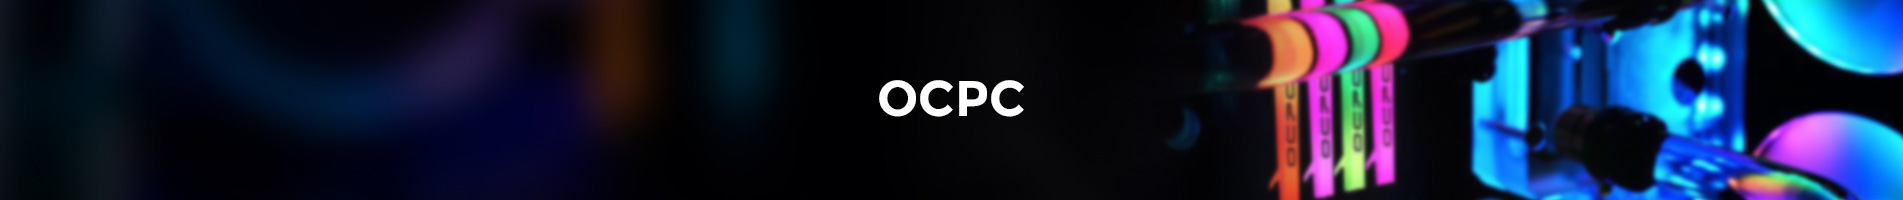 OCPC_175752.jpg